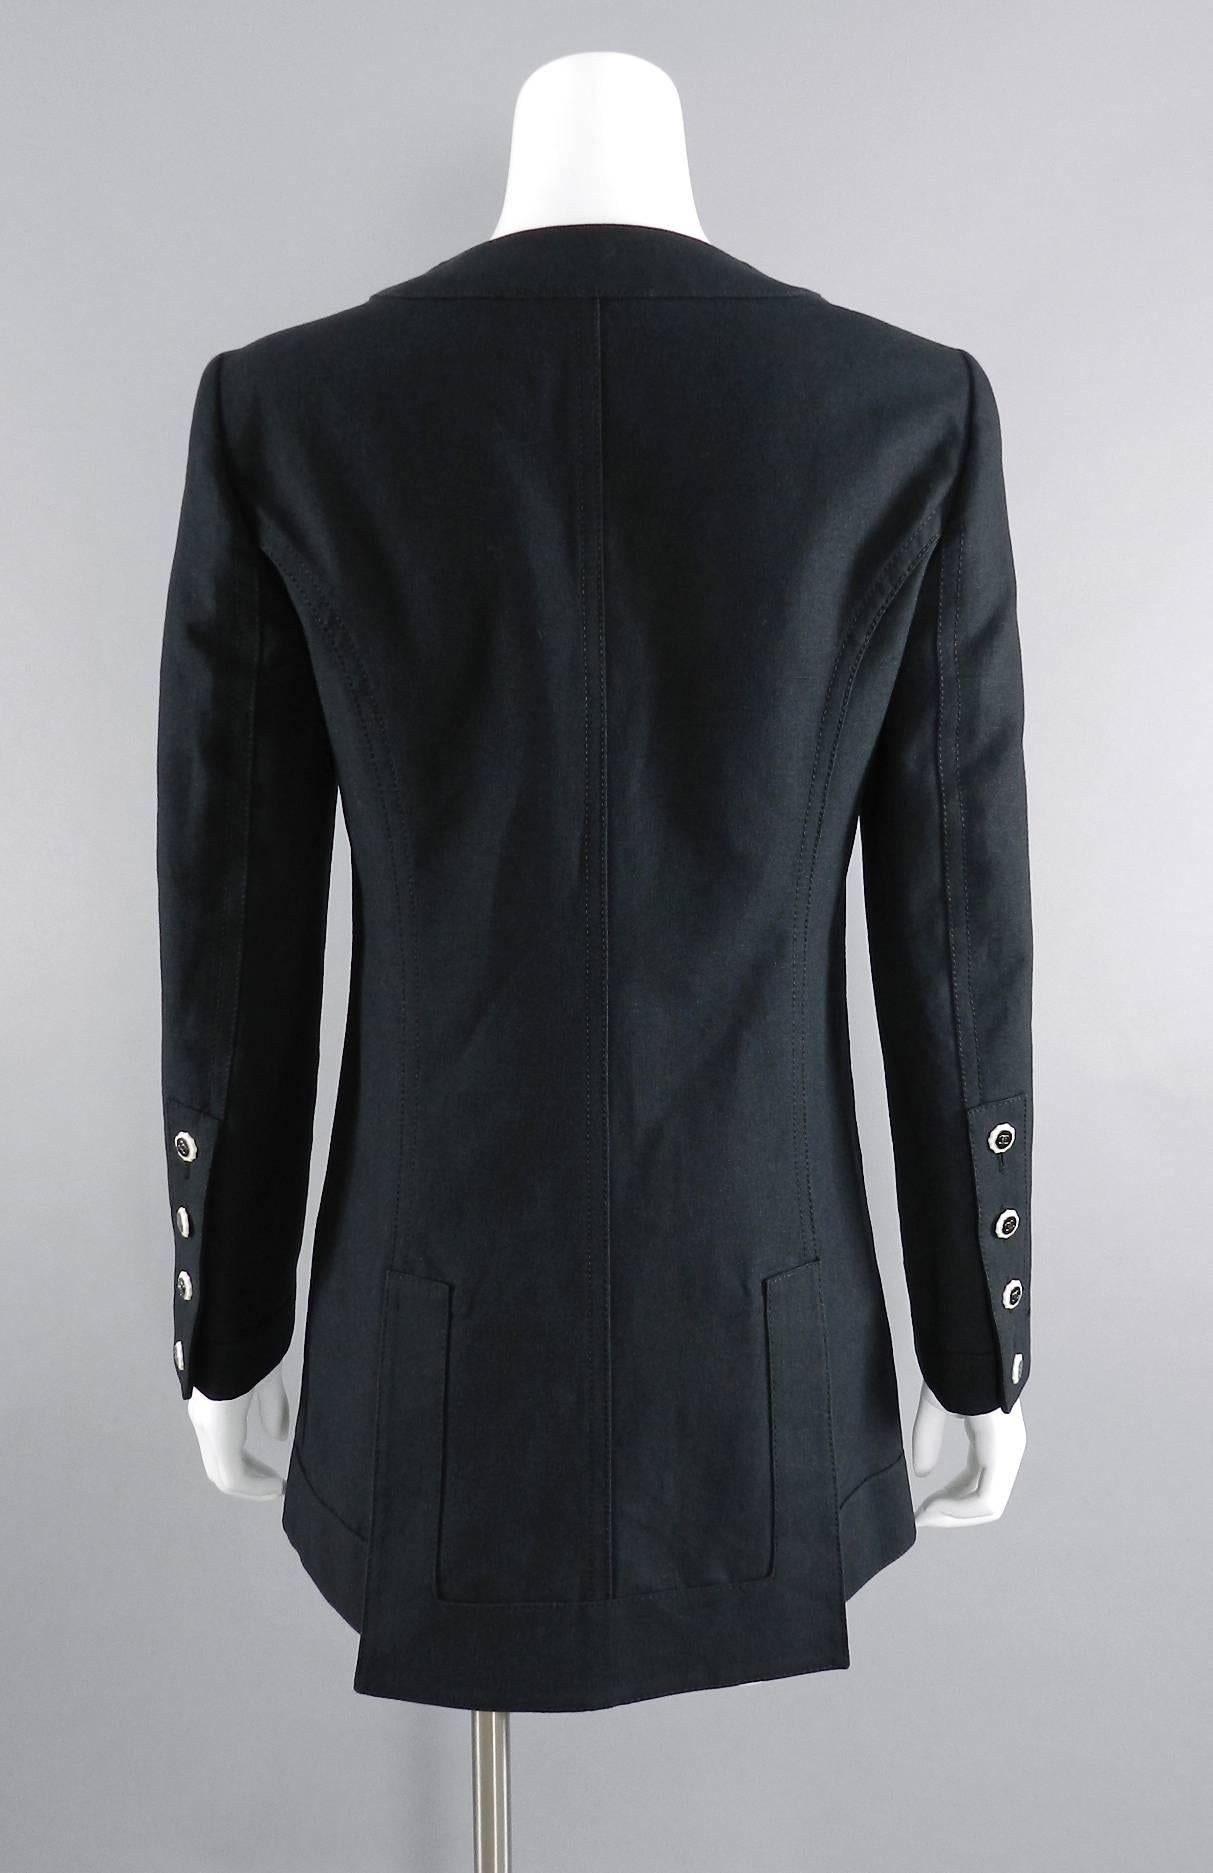 chanel black jacket